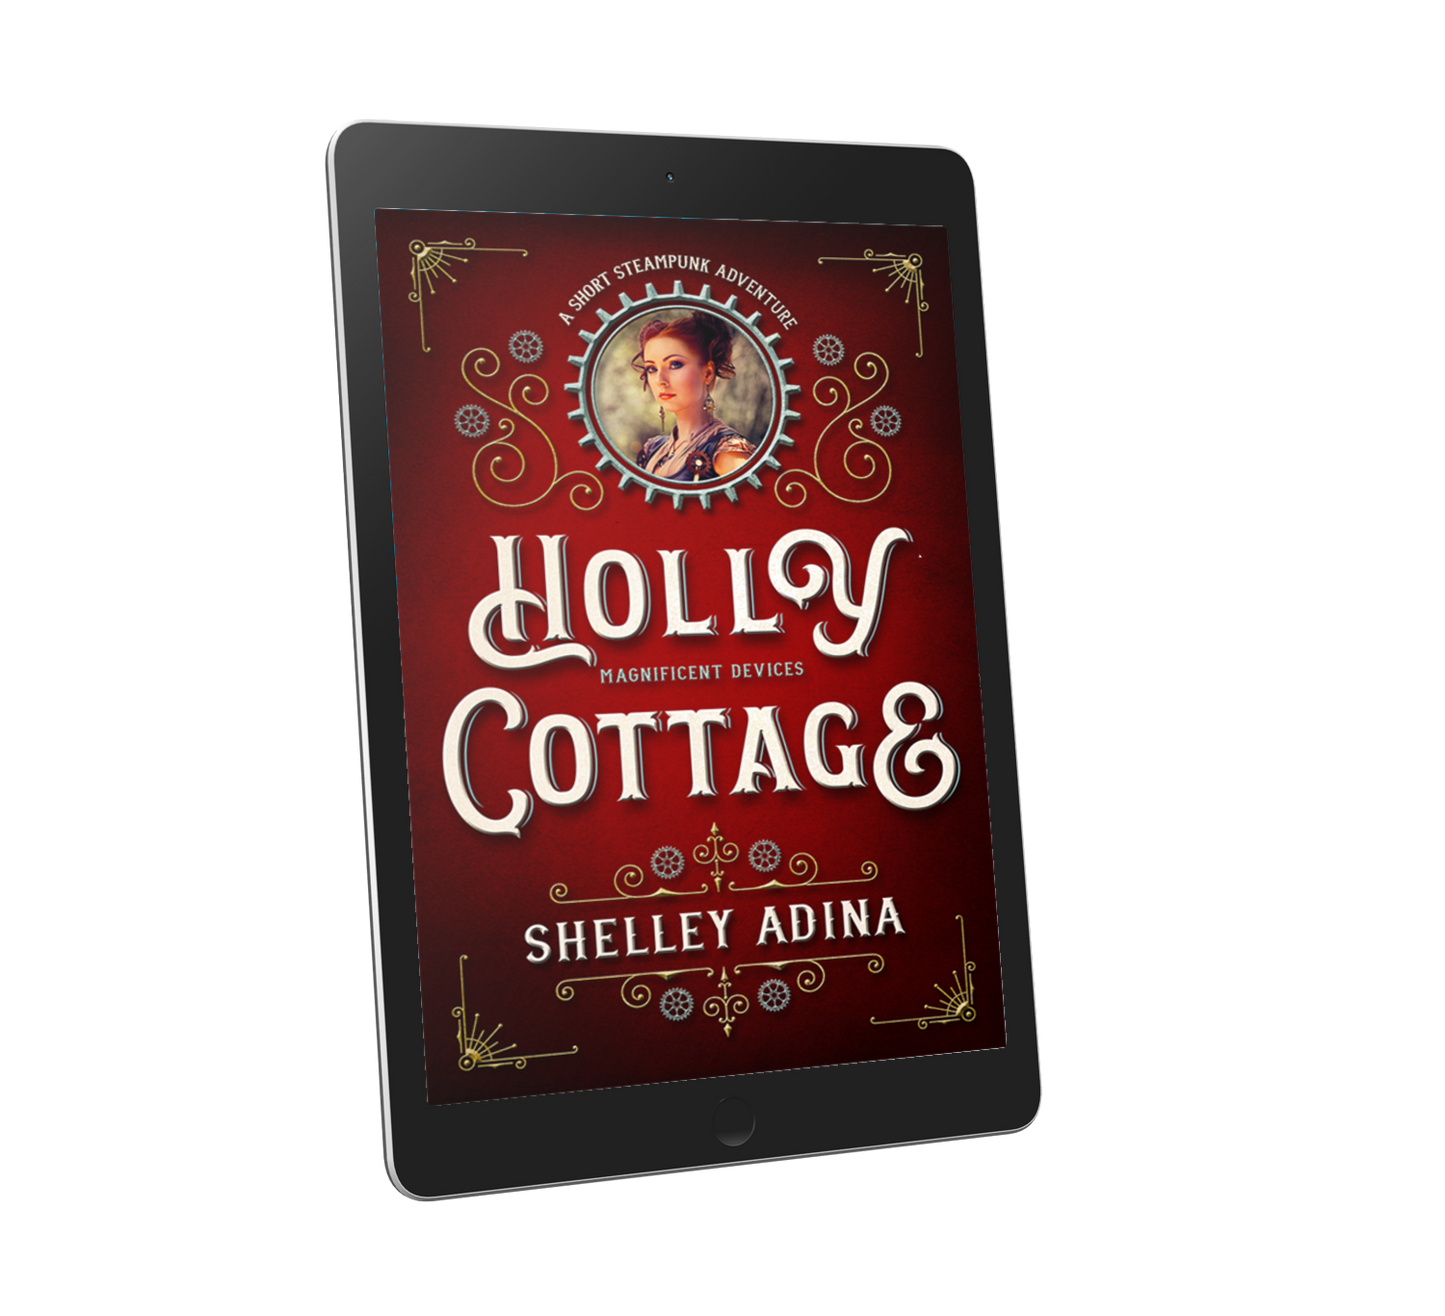 Holly Cottage, a short steampunk adventure novella by Shelley Adina